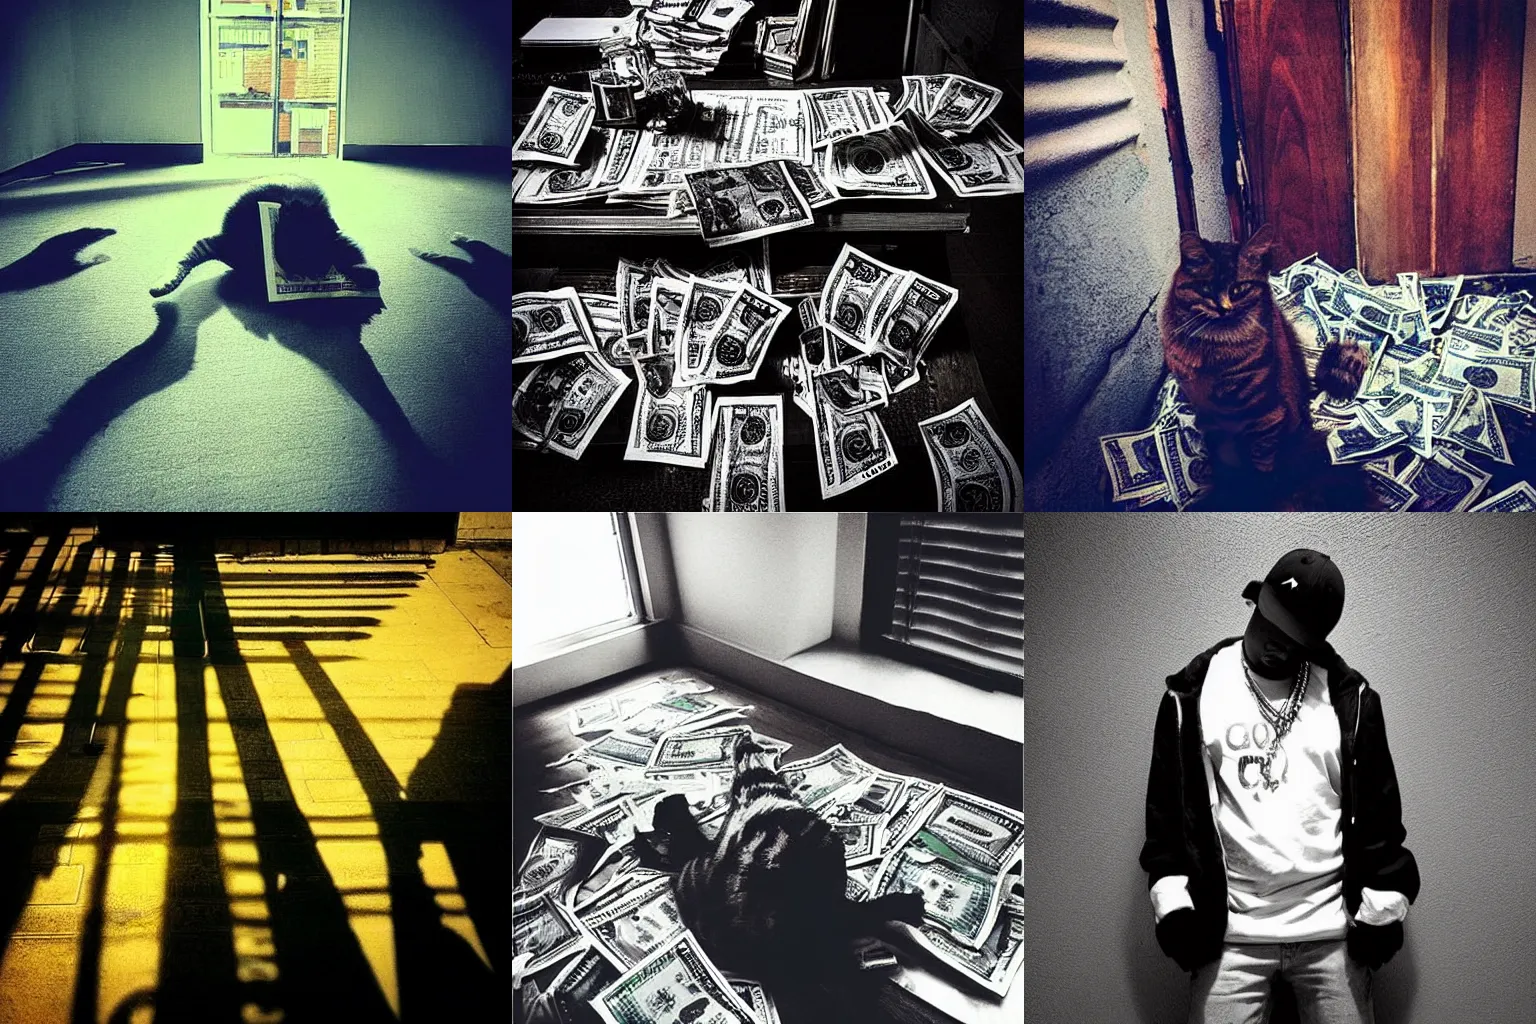 Prompt: “cat money millionaire, piles of cash, grunge lighting, rap promotion, intense shadows”